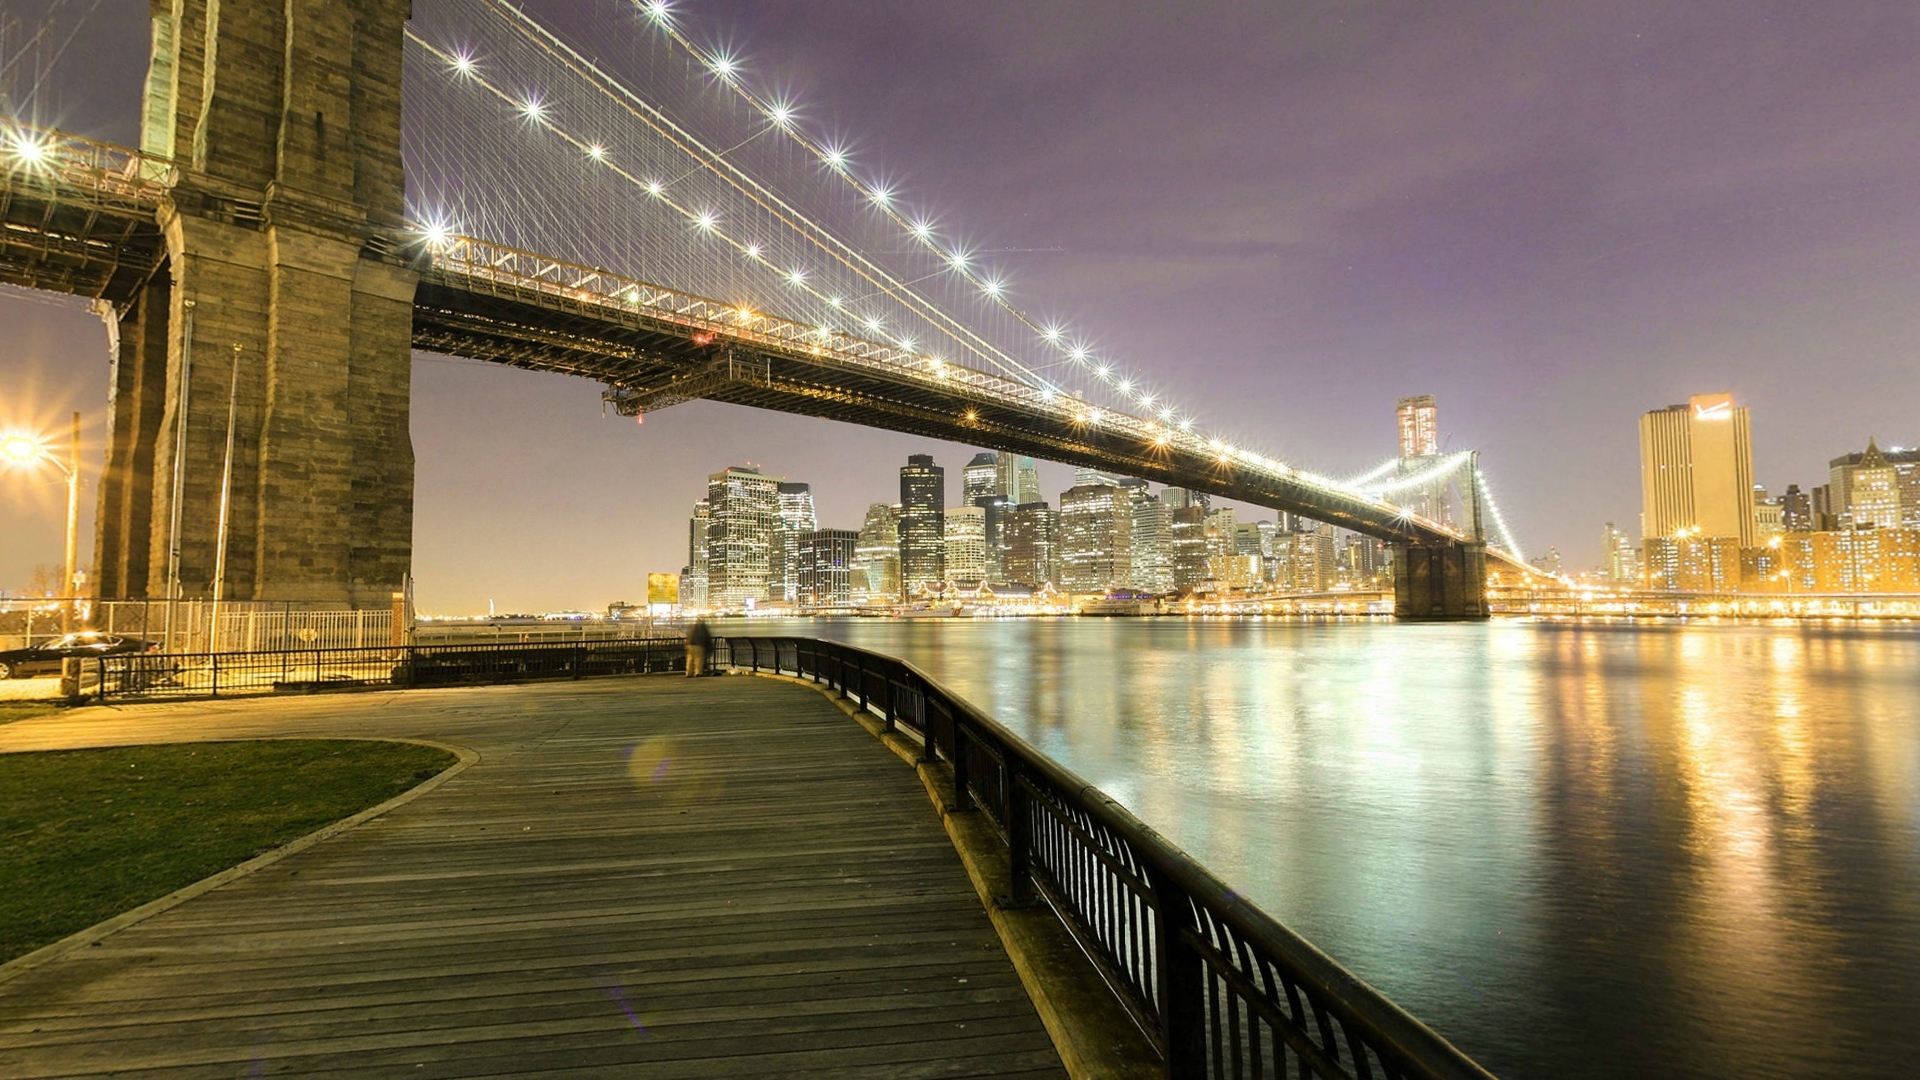 Бруклинский мост вид сбоку